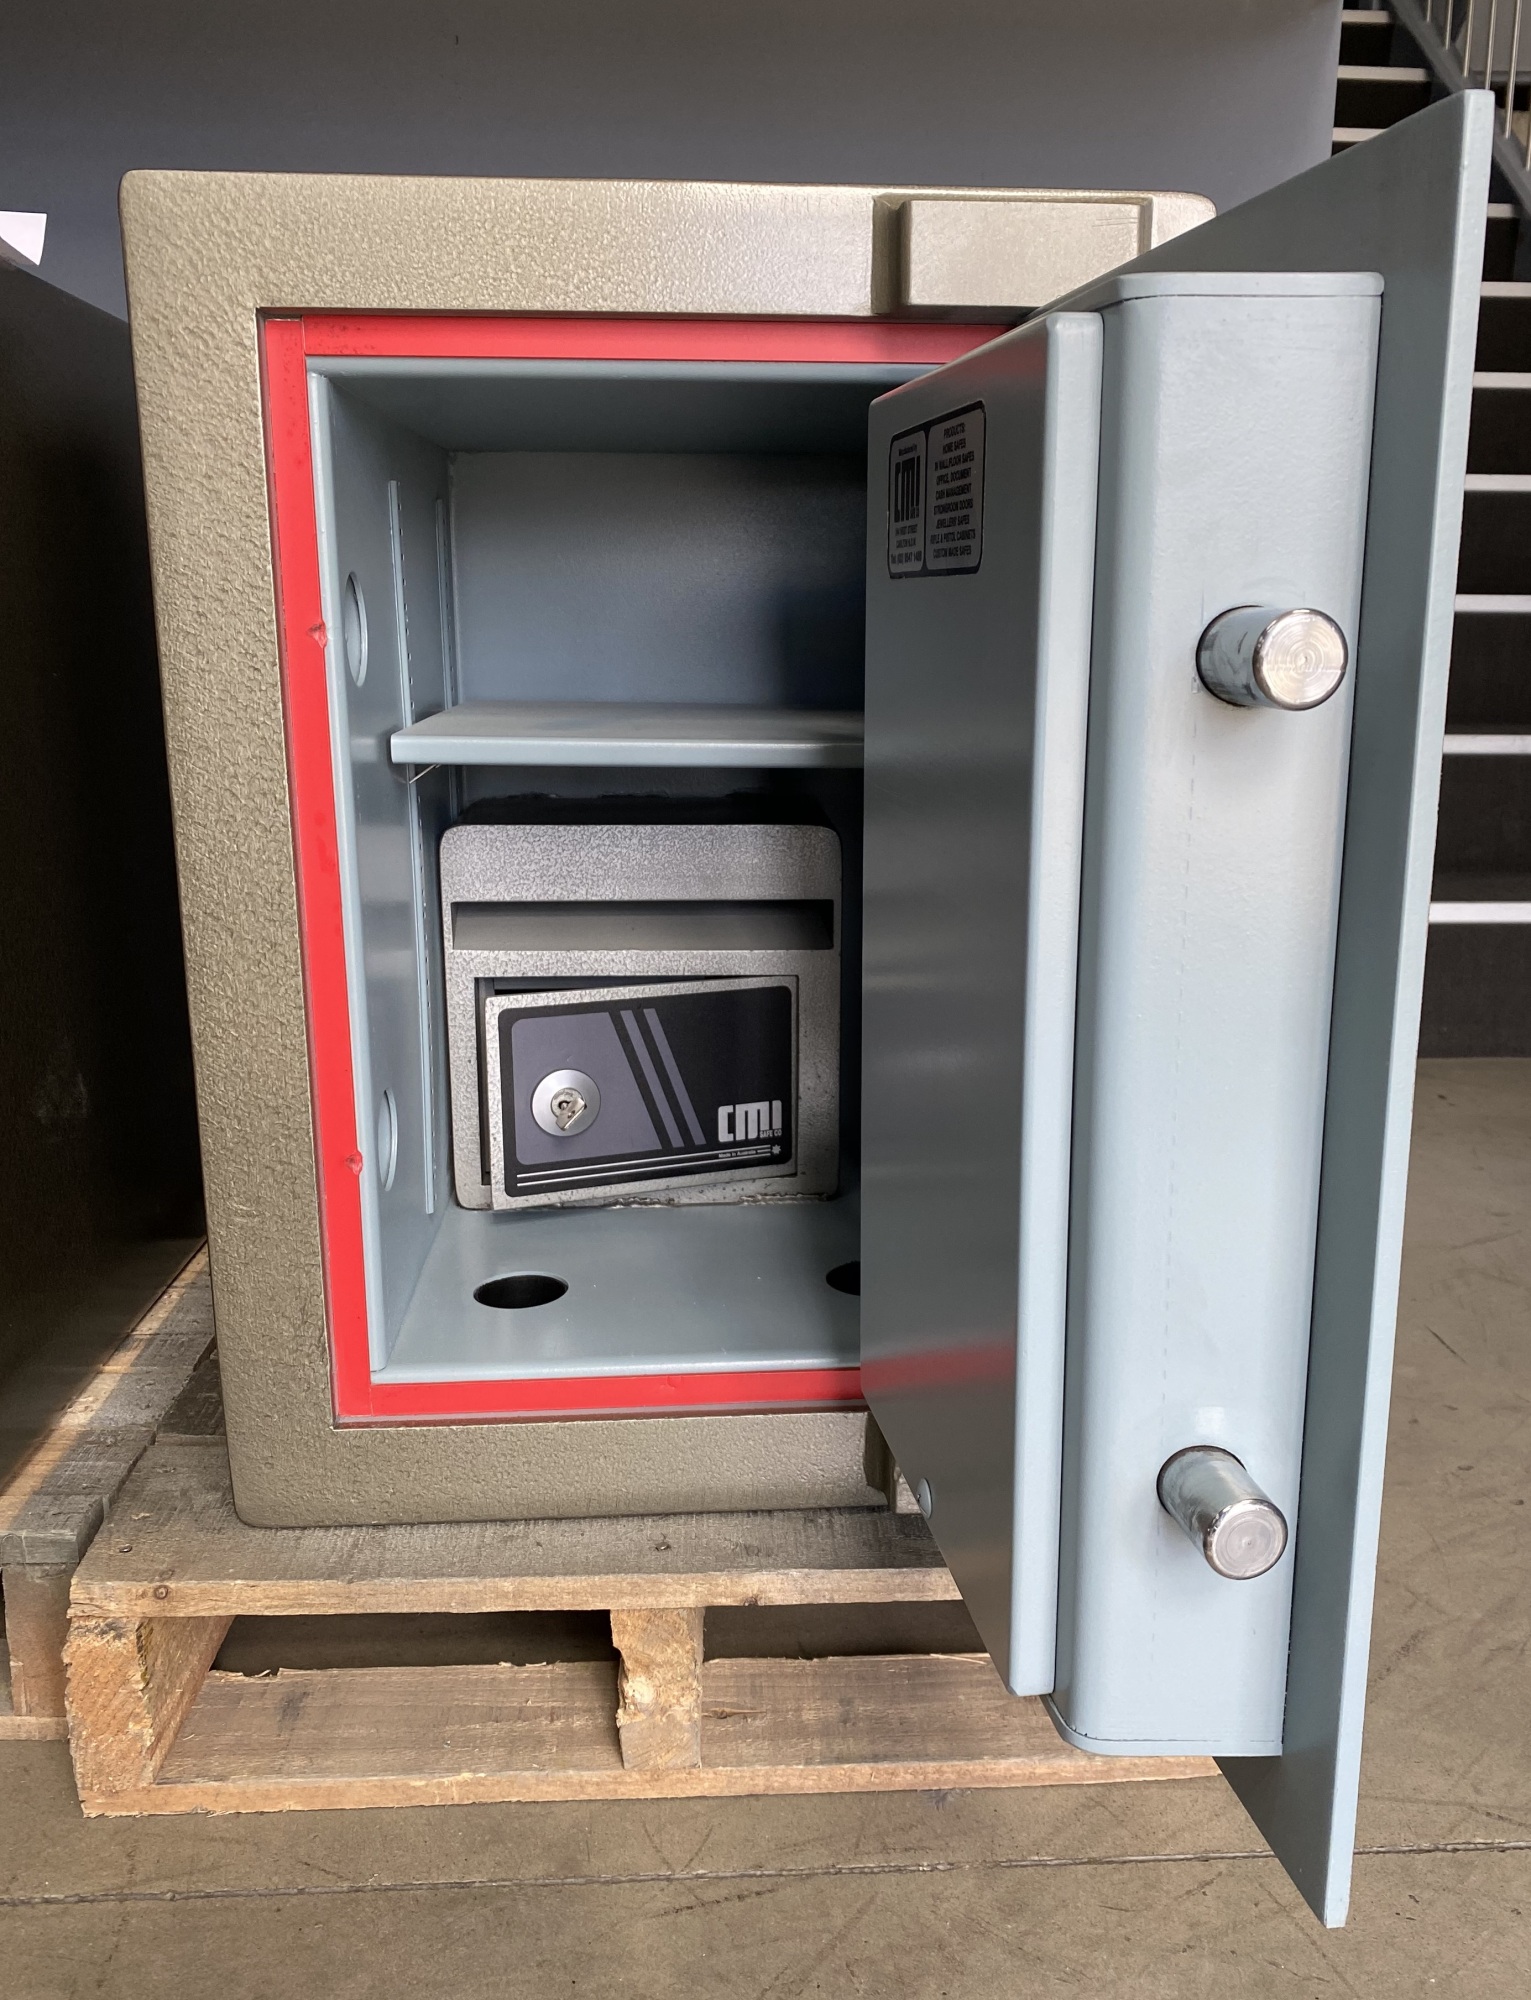 CMI SB with Dep1-K Internal Deposit Safe